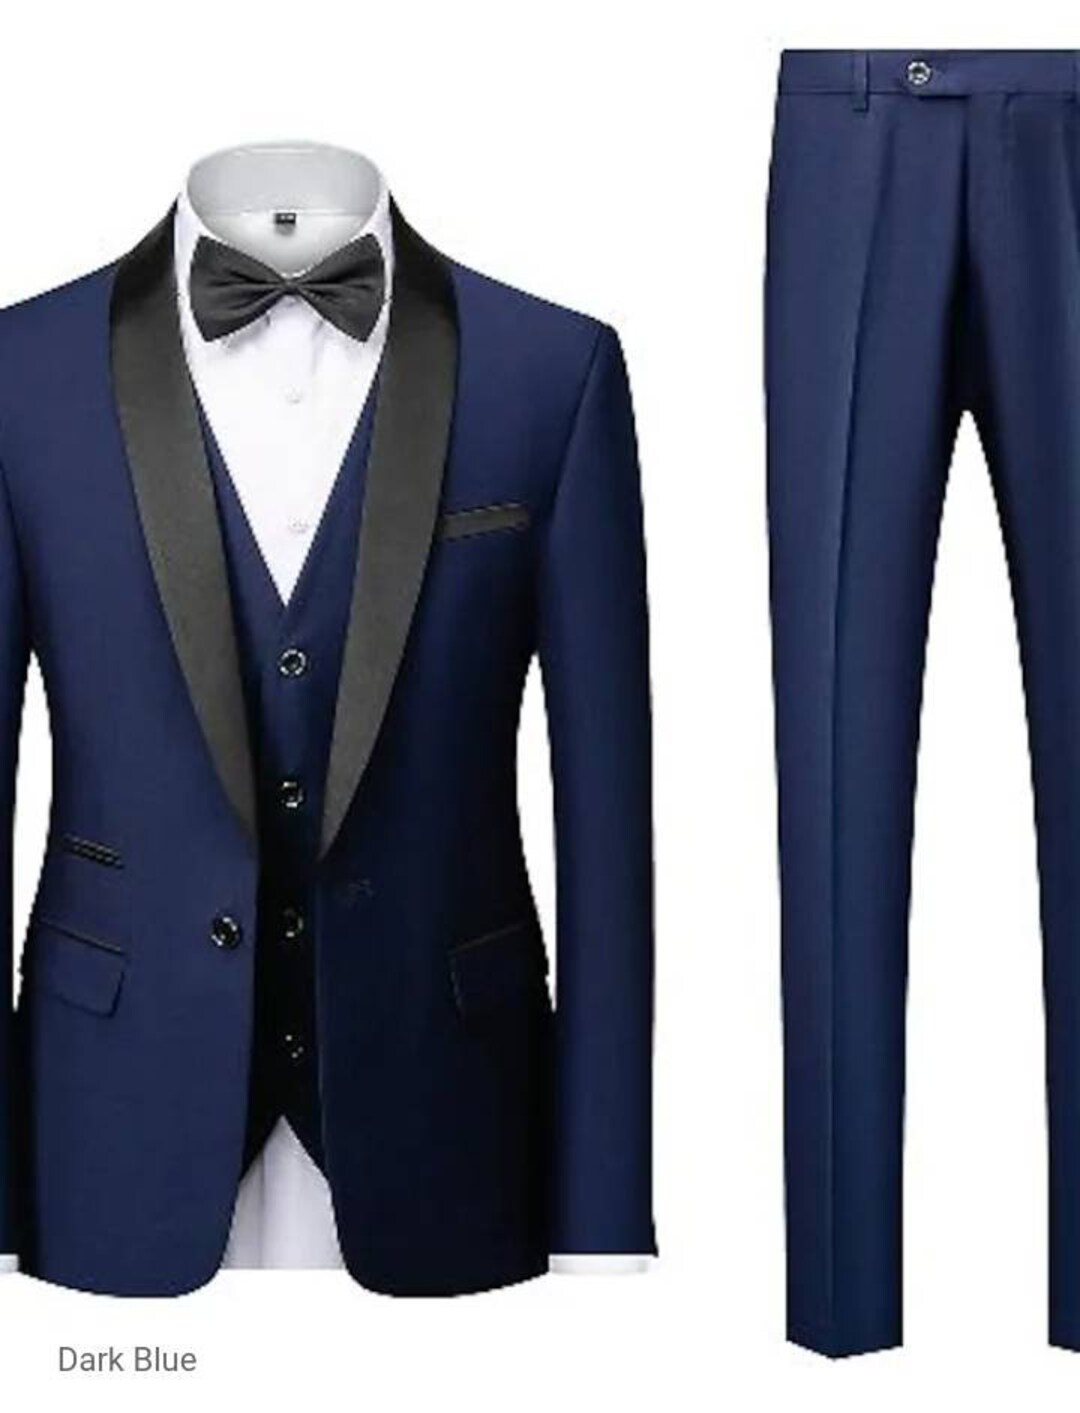 Dark Blue Wedding Suit for Men/navy Blue Suit/custom Made Suit - Etsy